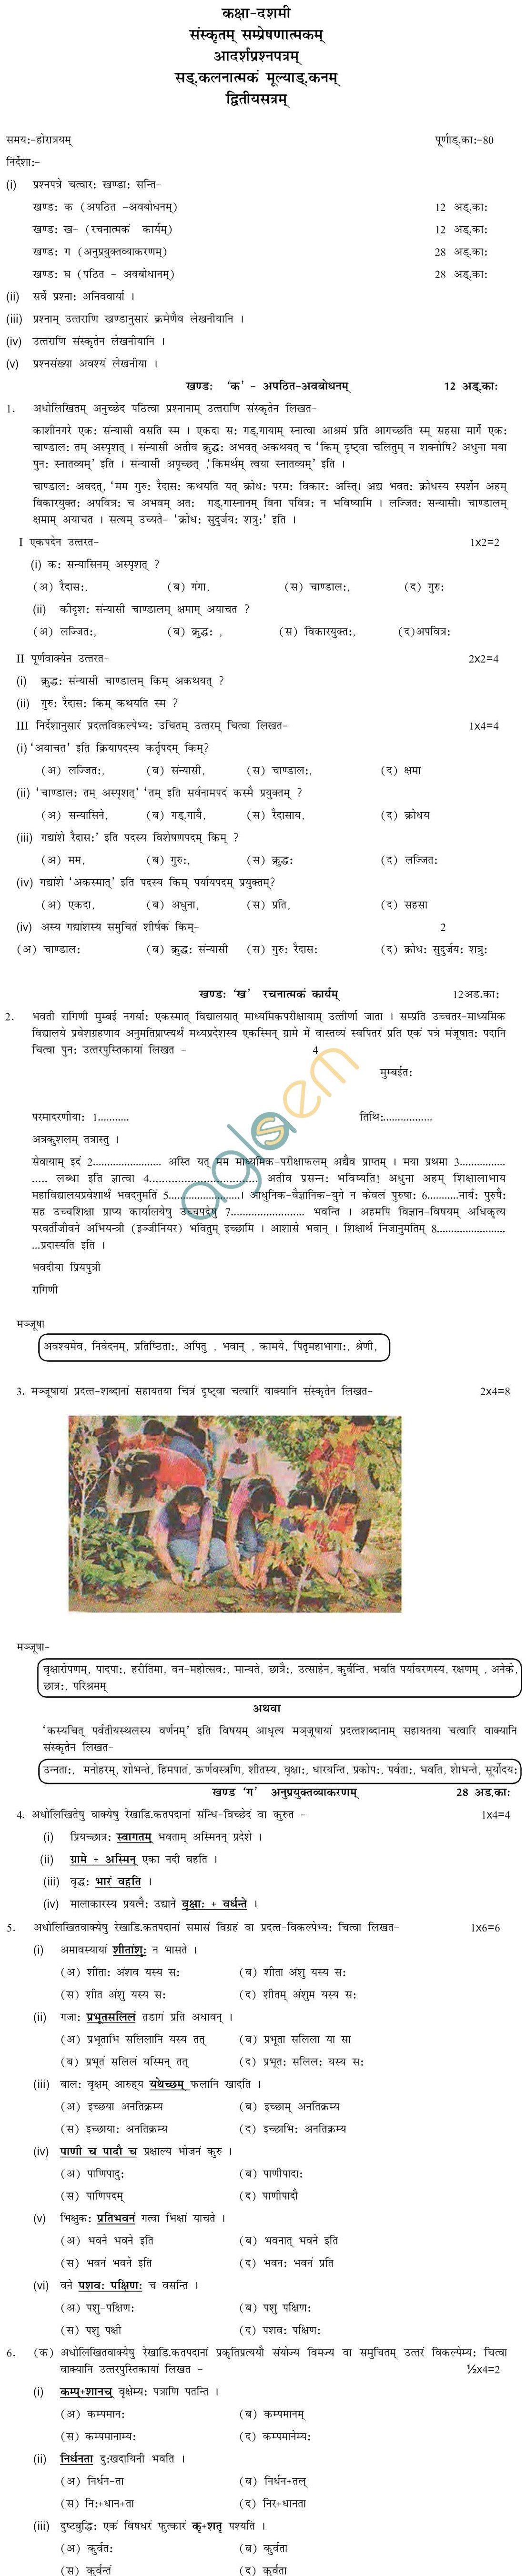 CBSE Board Exam 2013 Sample Papers (SA2) Class X - Sanskrit